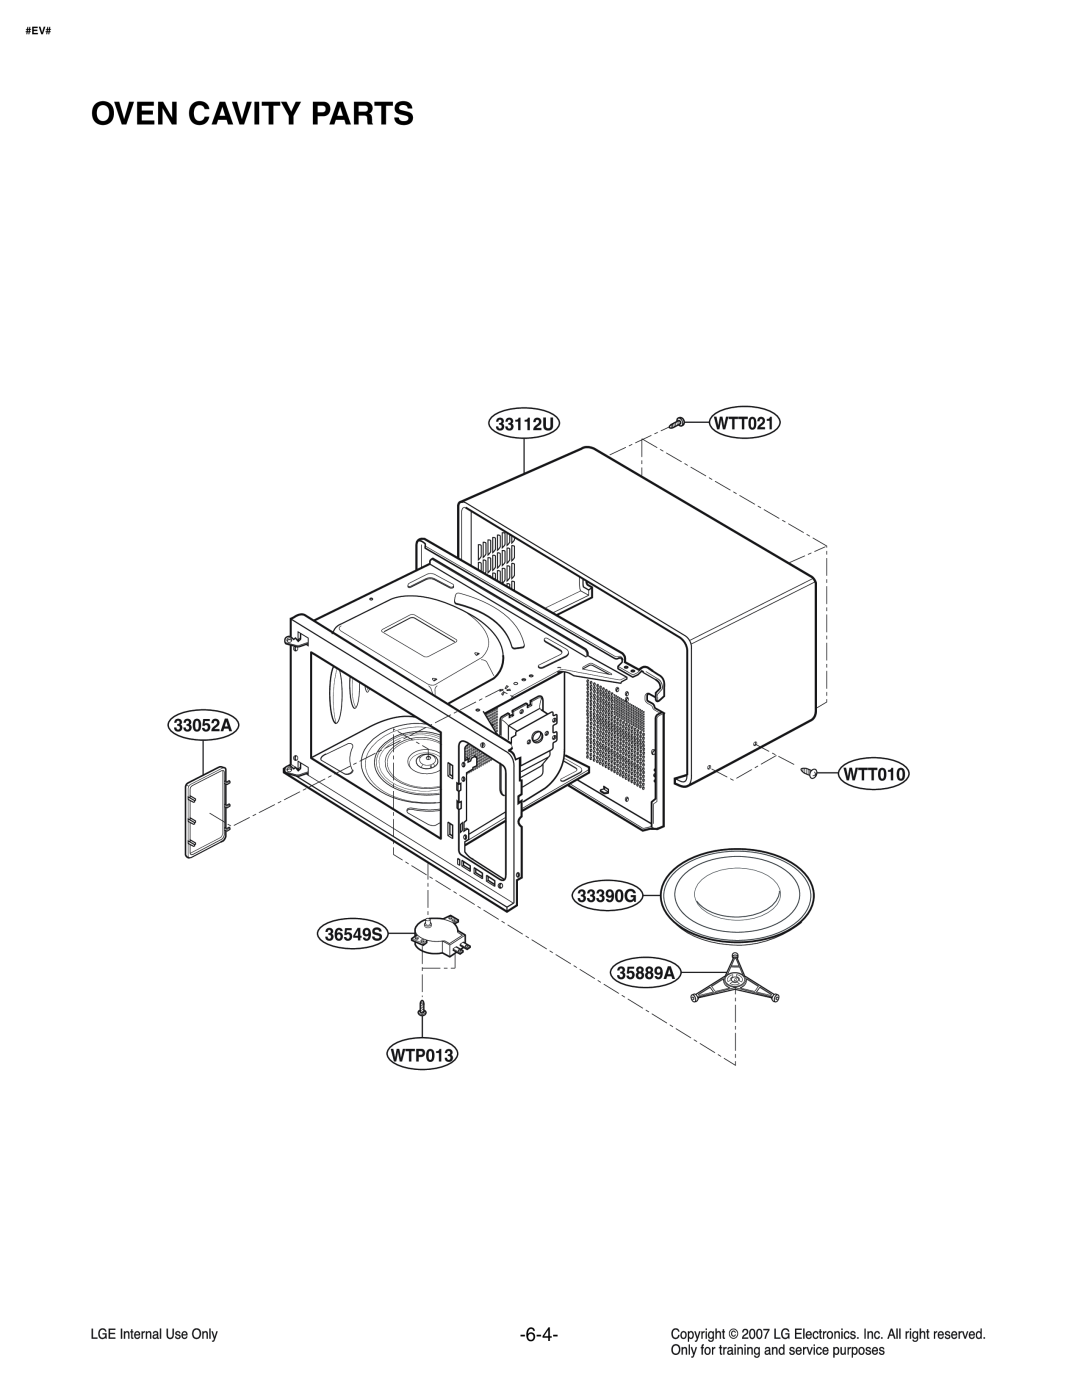 LG Electronics MS3447GRS service manual Oven Cavity Parts, 33112U, 33052A WTT010 33390G, 36549S WTP013, 35889A, WTT021 